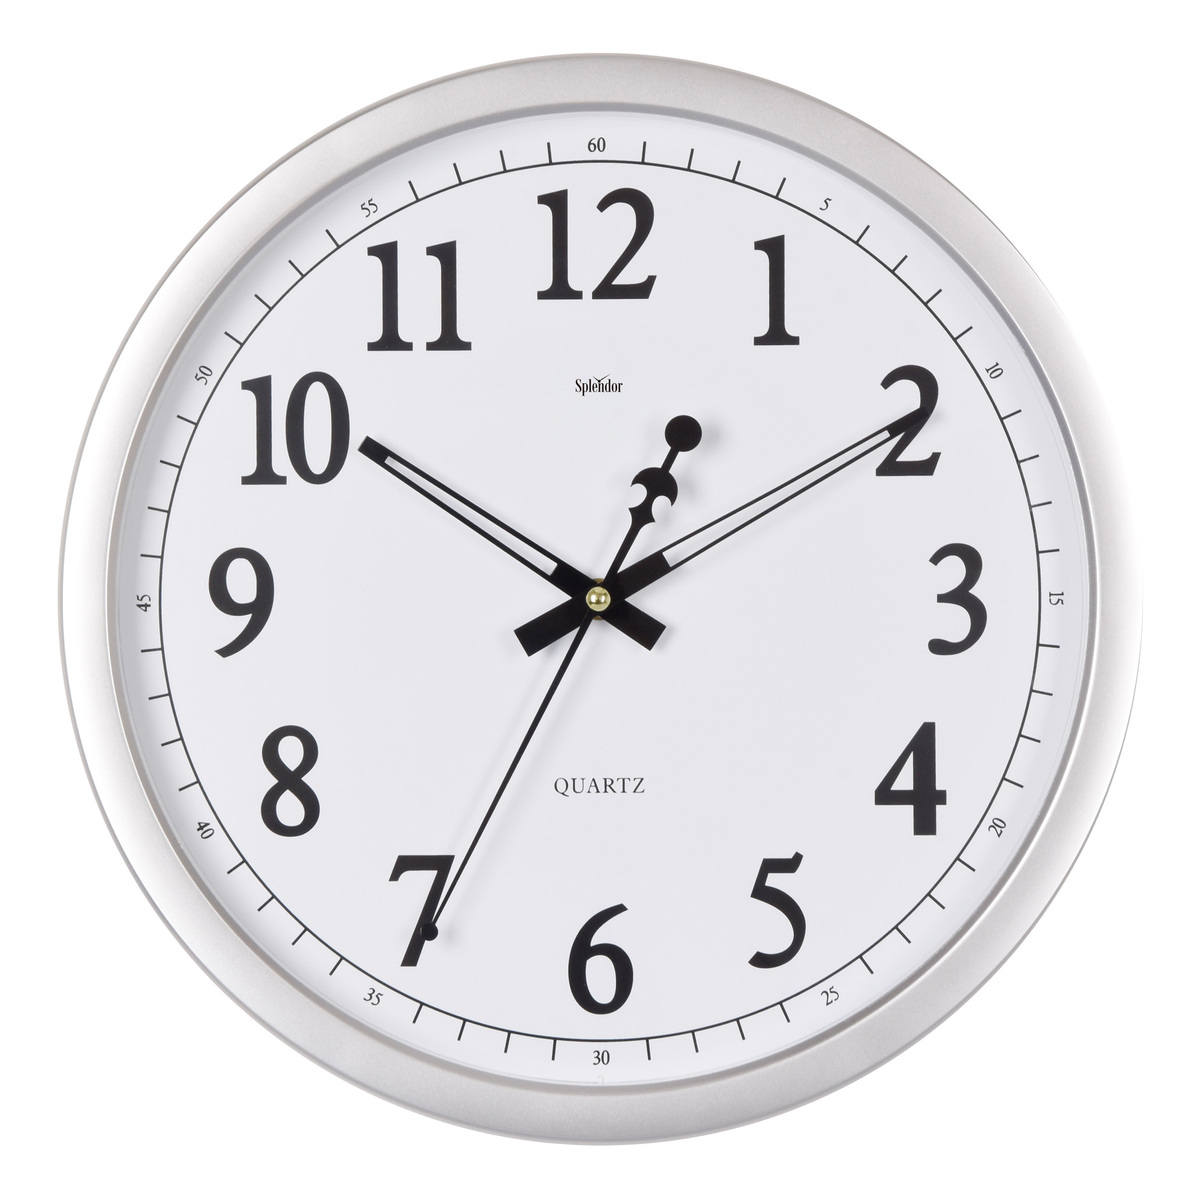 Splendor Ava Wall Clock, 34.7 cm, Aluminum, PW048-1700